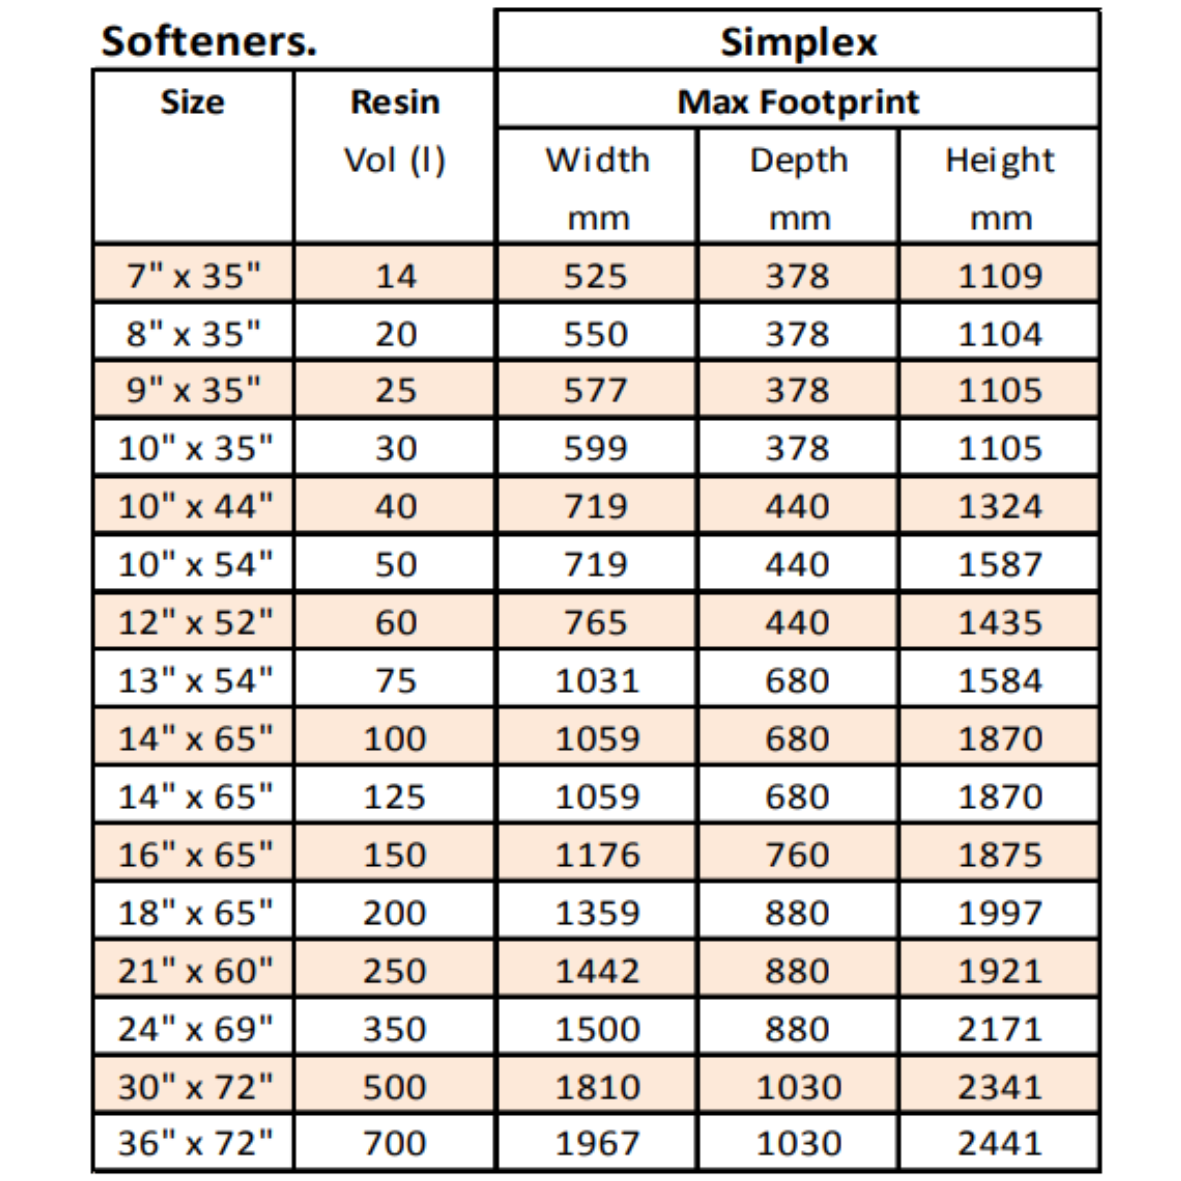 14" x 65", 125L, Simplex Water Softener, Autotrol 278 Time Controller, 5m³/hr